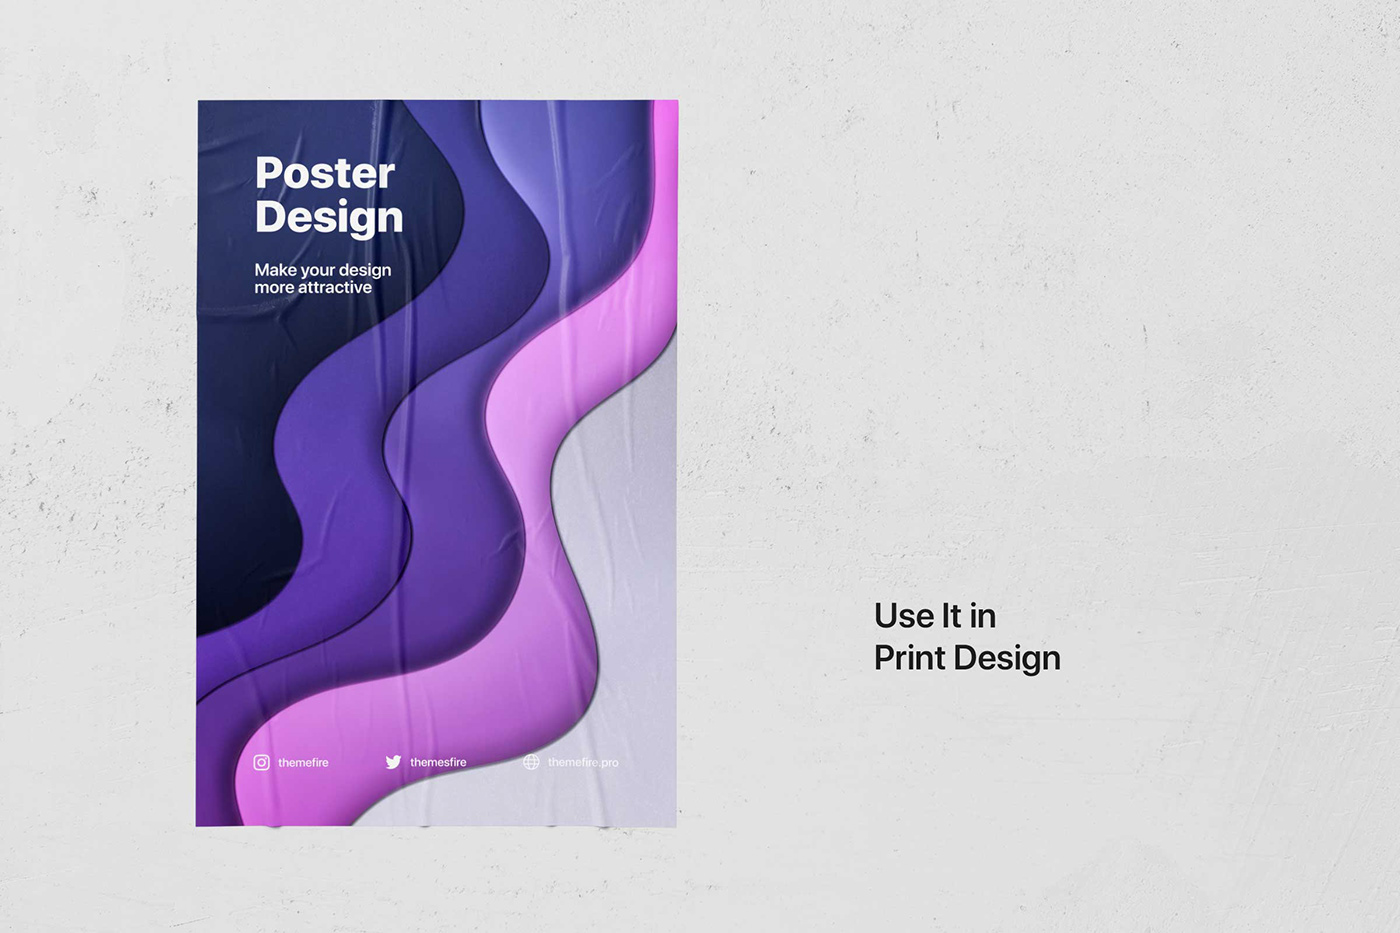 background abstract 3D papercut waves carton paper spline Web Design  Social Media Design